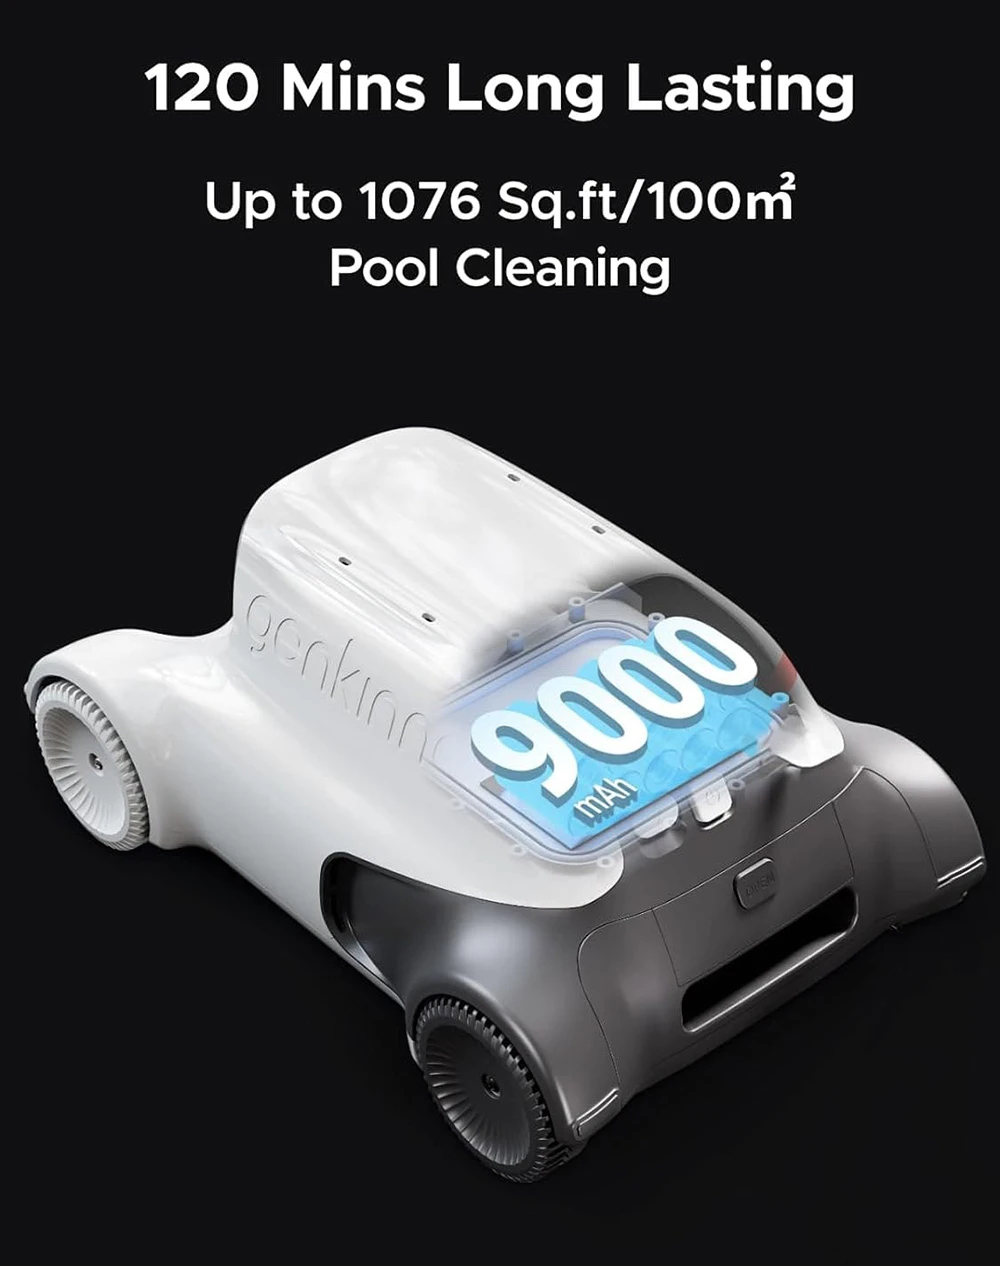 https://img.gkbcdn.com/d/202404/Genkinno-P2-Robot-Pool-Vacuum-for-Up-to-100m--1000-sq--ft-Grey-EU-Plug-524300-4._p1_.jpg